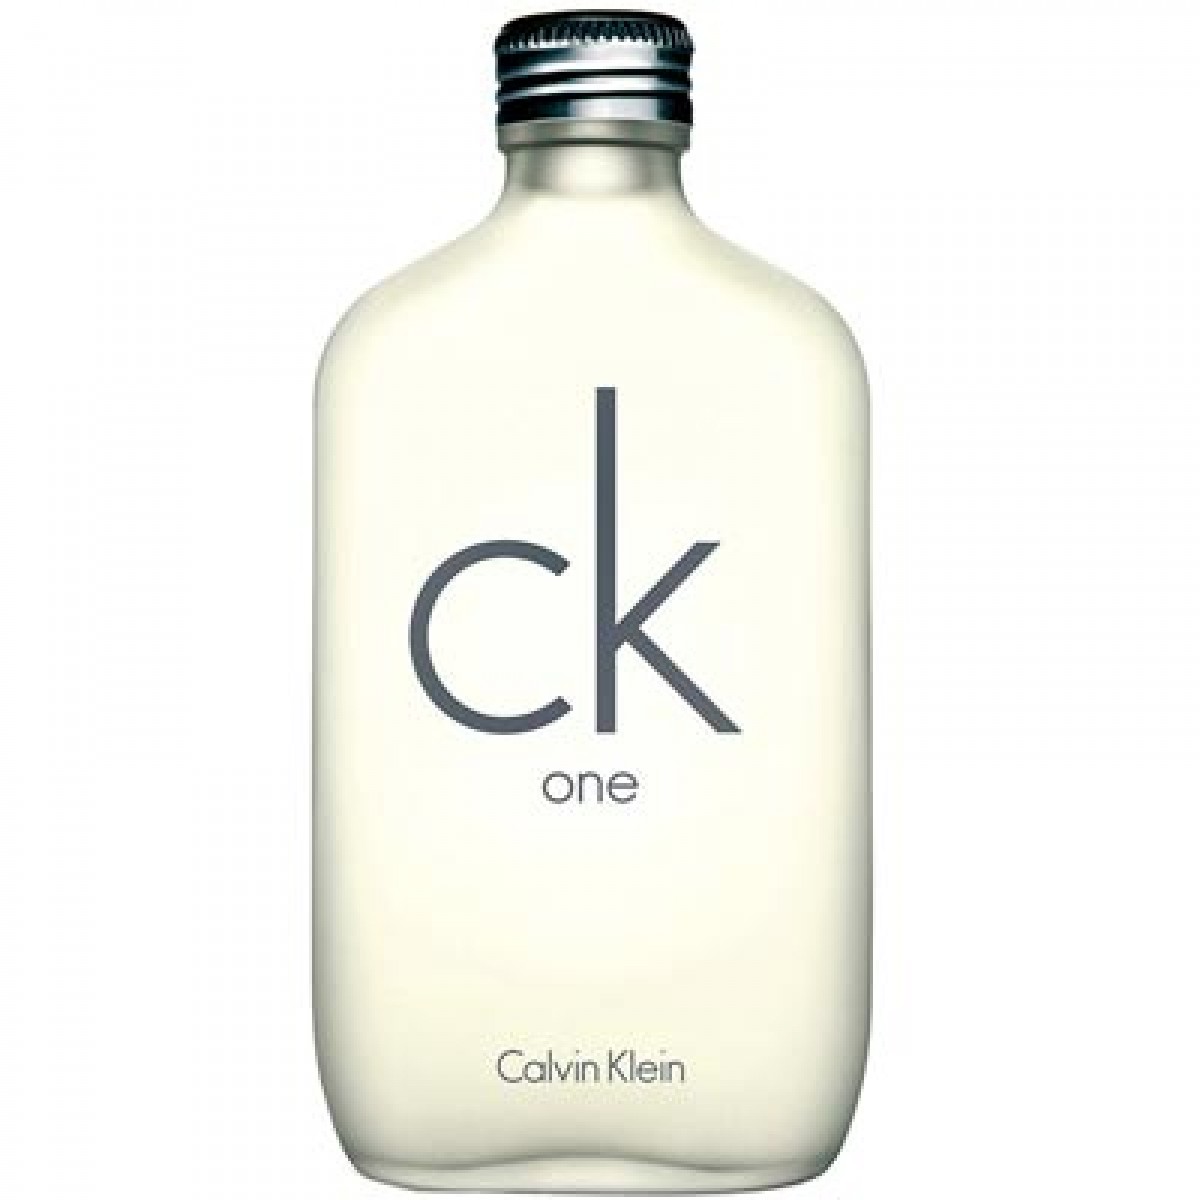 Calvin Klein CK One Eau Toilette